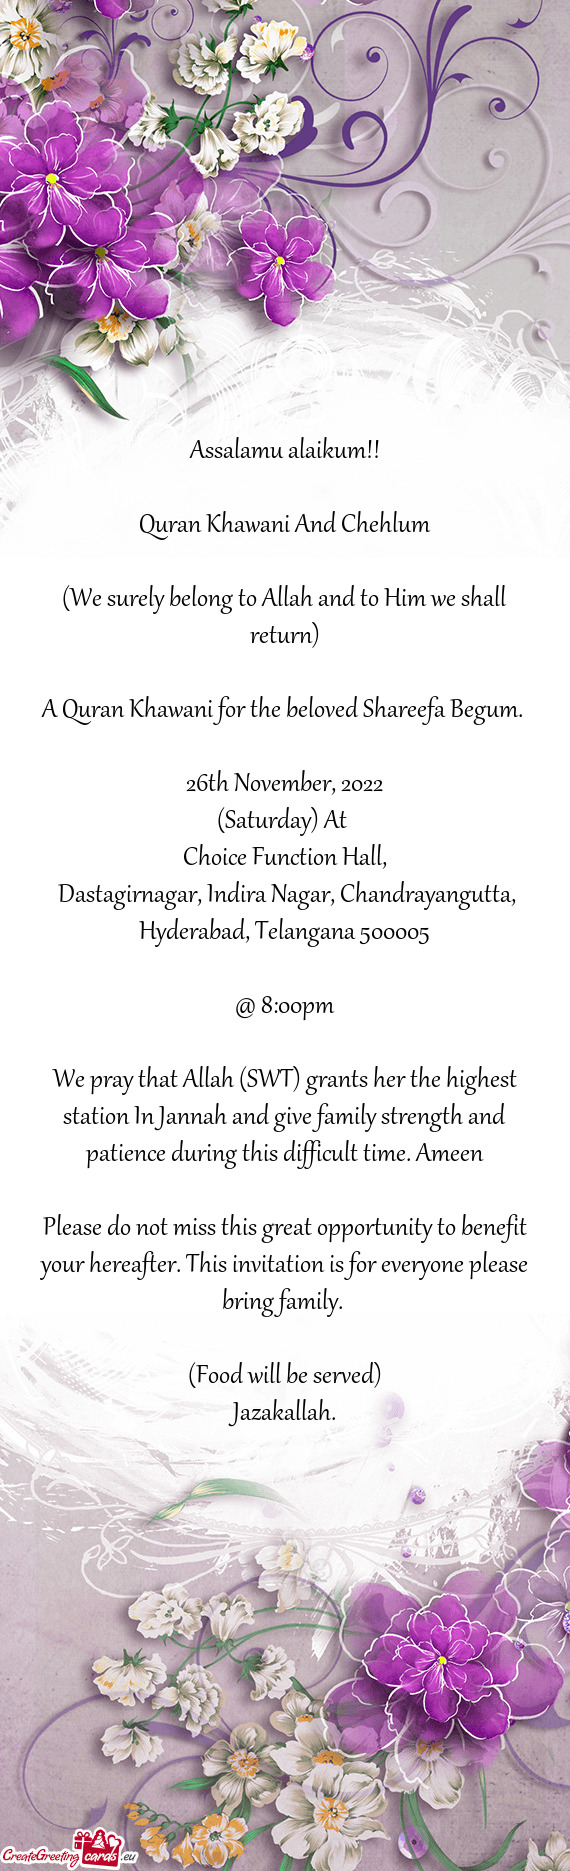 A Quran Khawani for the beloved Shareefa Begum